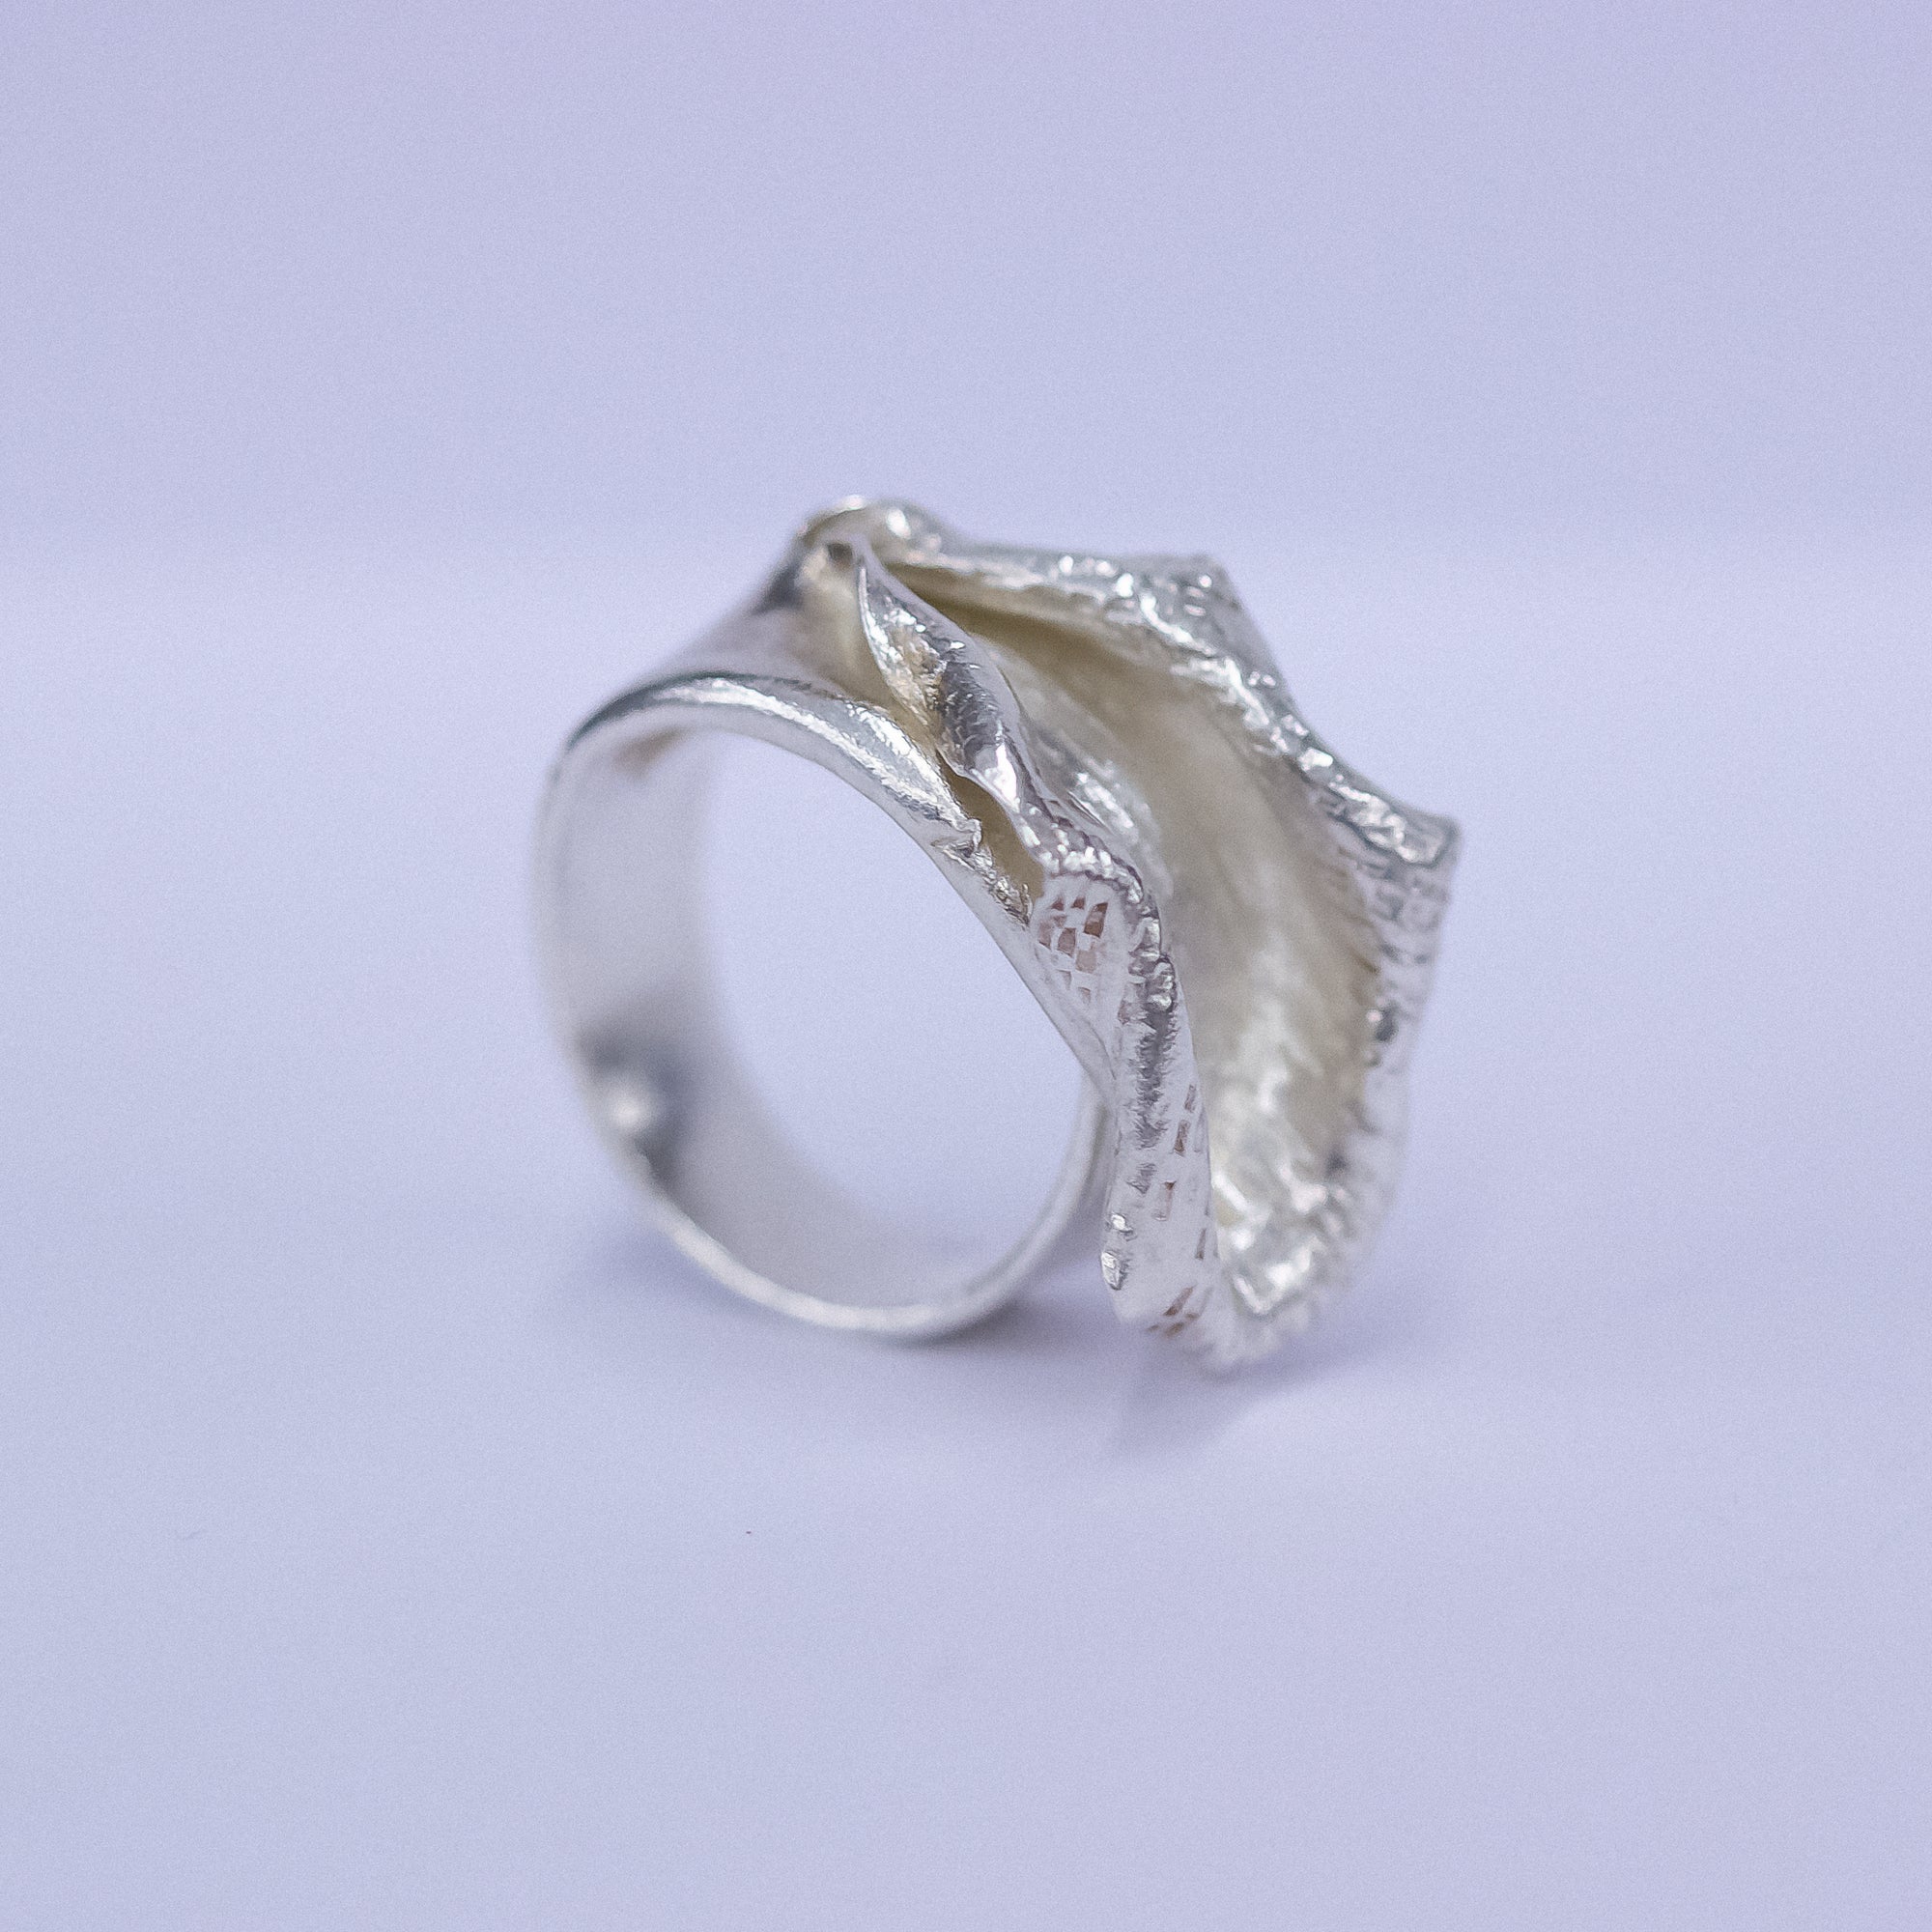 Handmade Curled Petal Adjustable Silver Ring